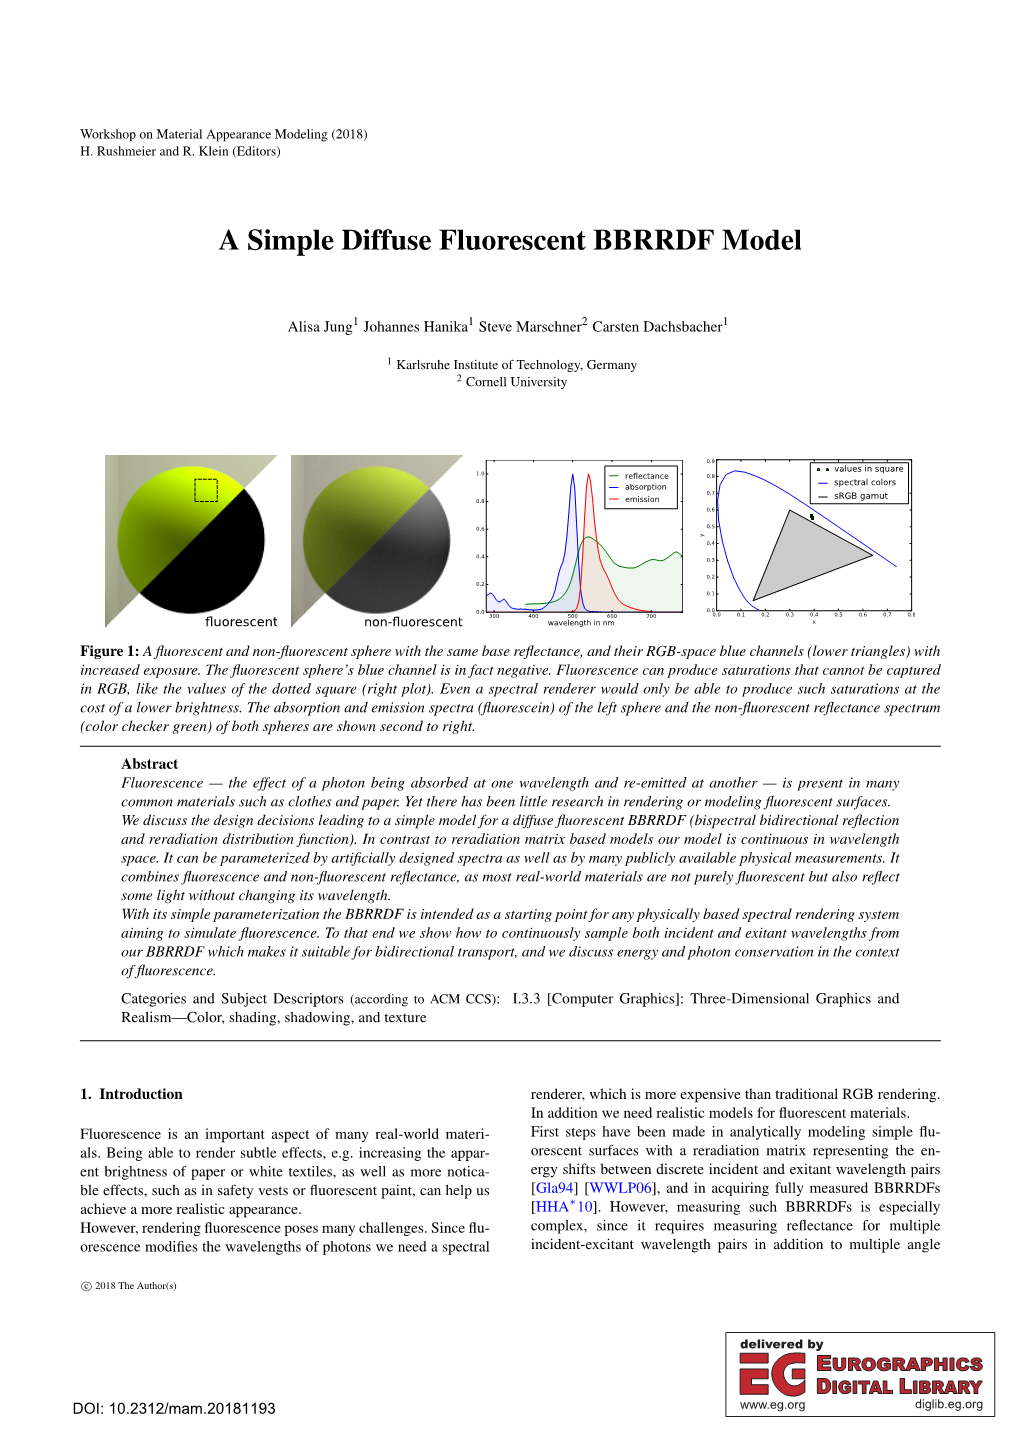 A Simple Diffuse Fluorescent BBRRDF Model